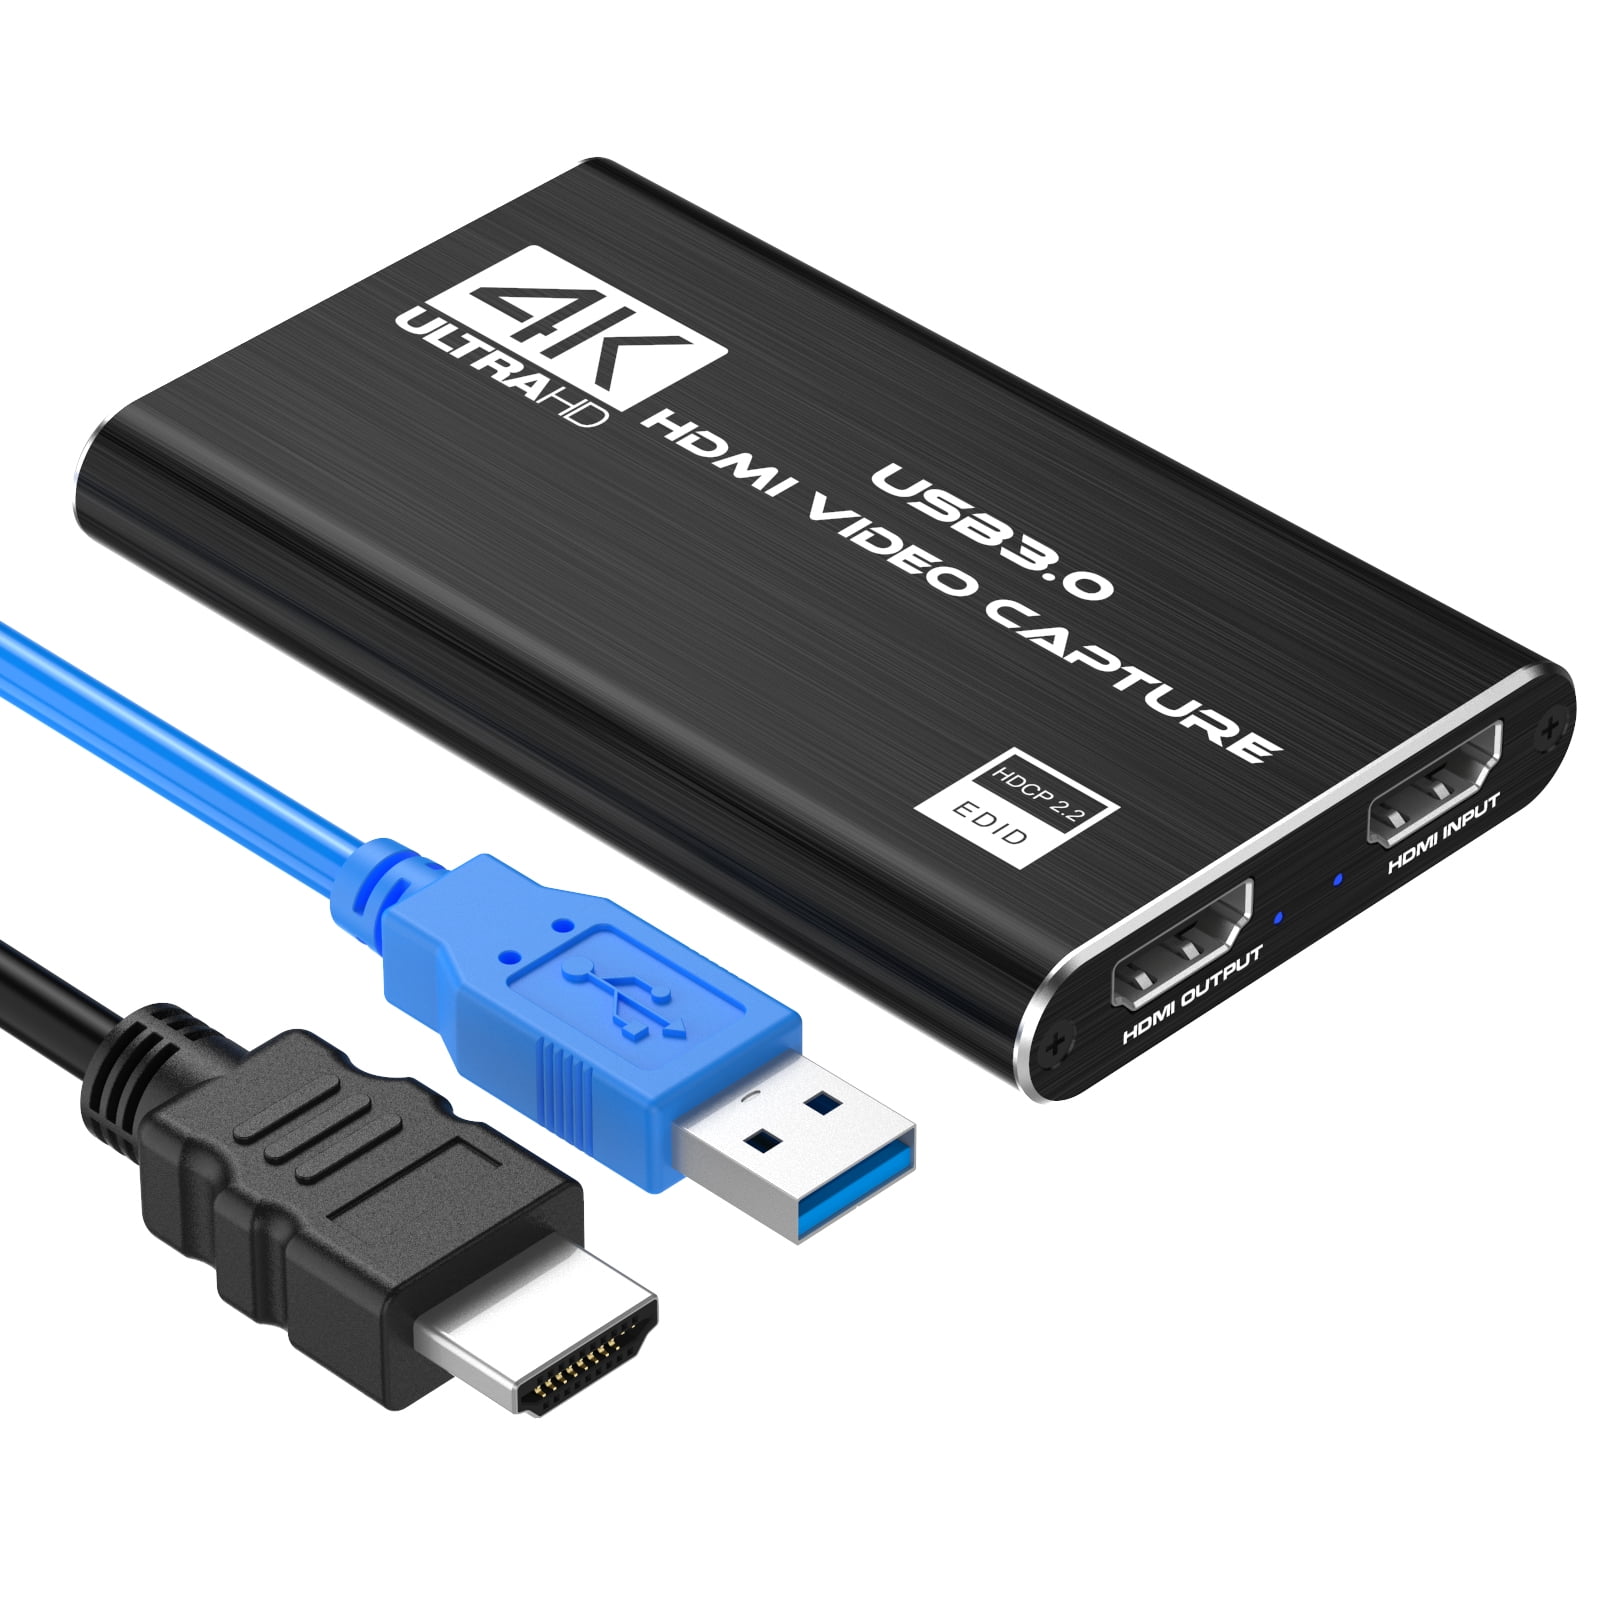 DIGITNOW Audio Video Capture Card, HDMI USB 3.0 Video Capture Device, Full HD Game Recording, Live Streaming Broadcasting-Black - Walmart.com